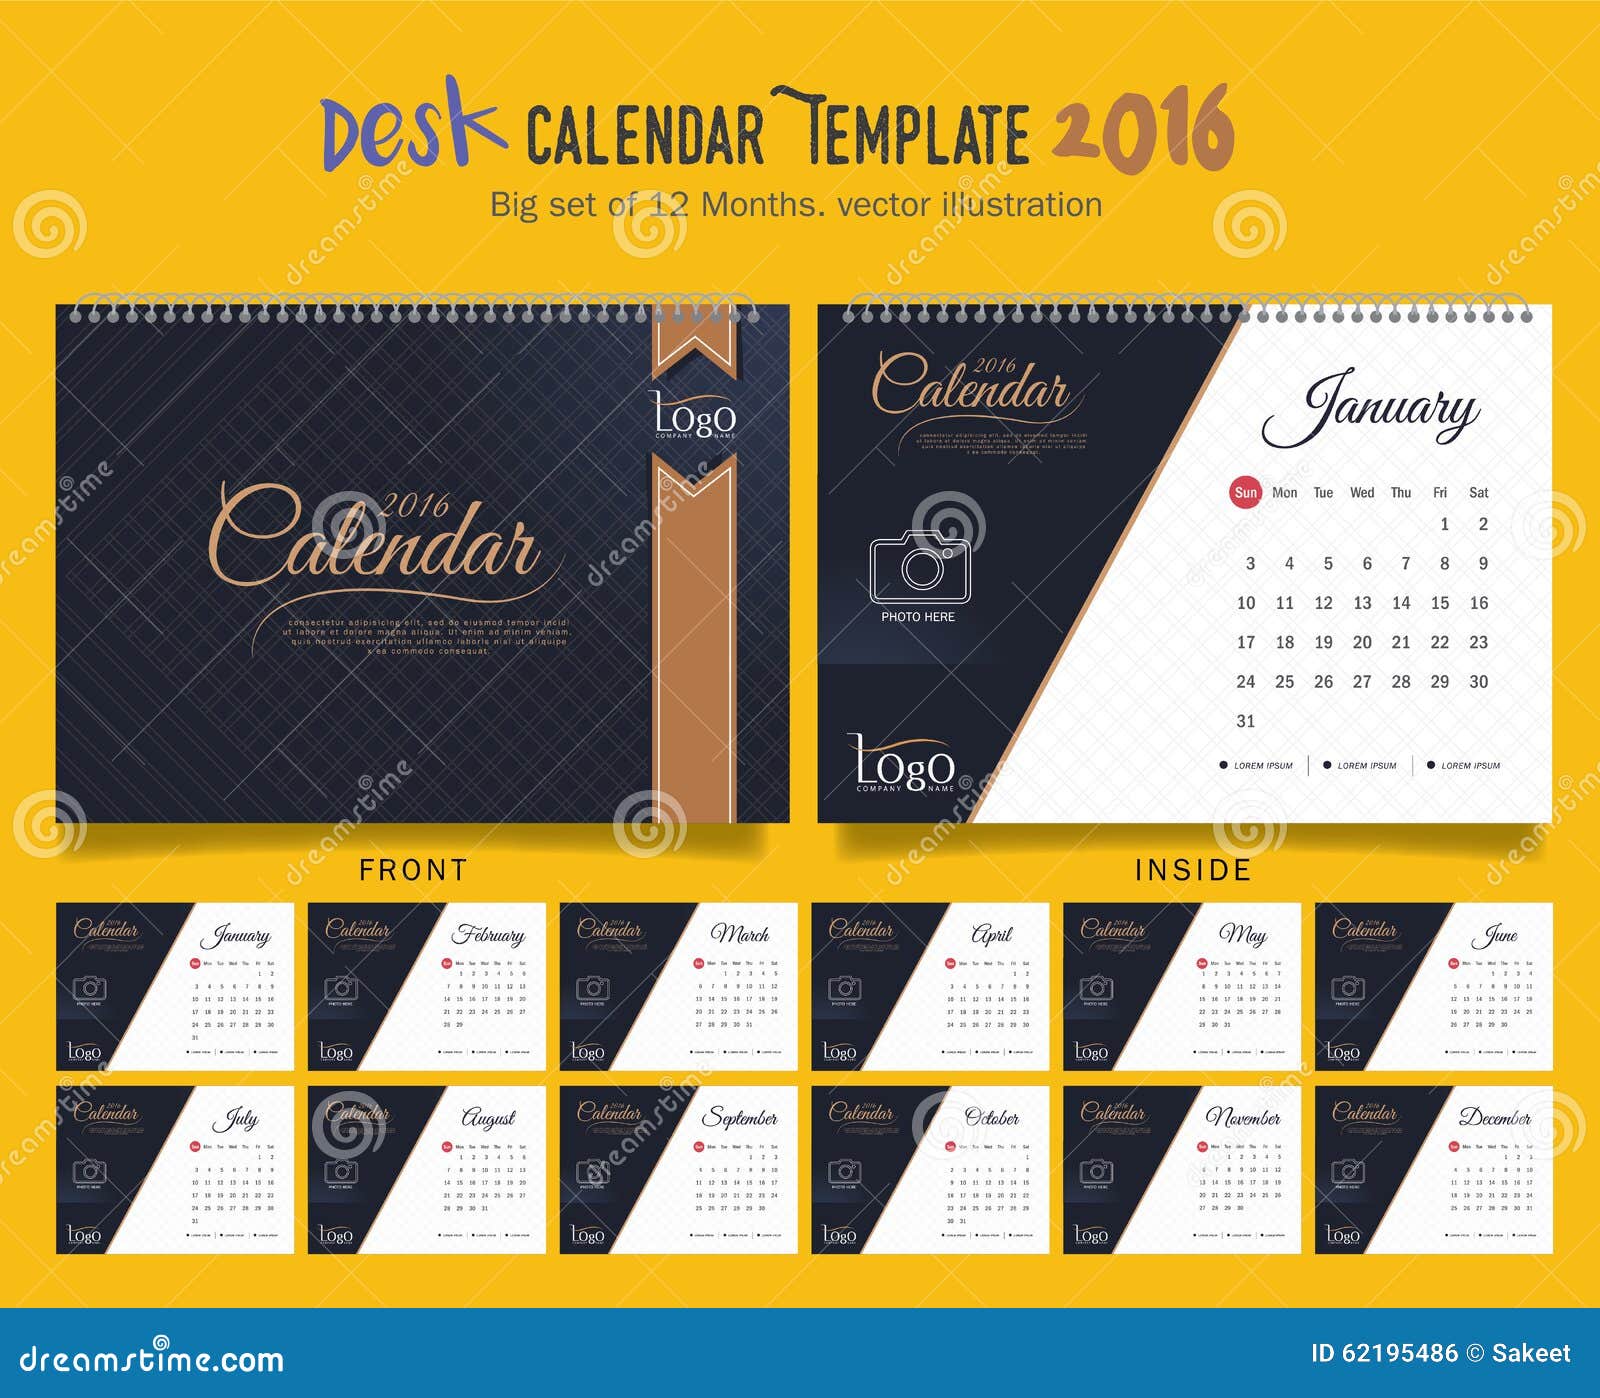 Desk Calendar 2016 Vector Design Template Big Set Of 12 Months